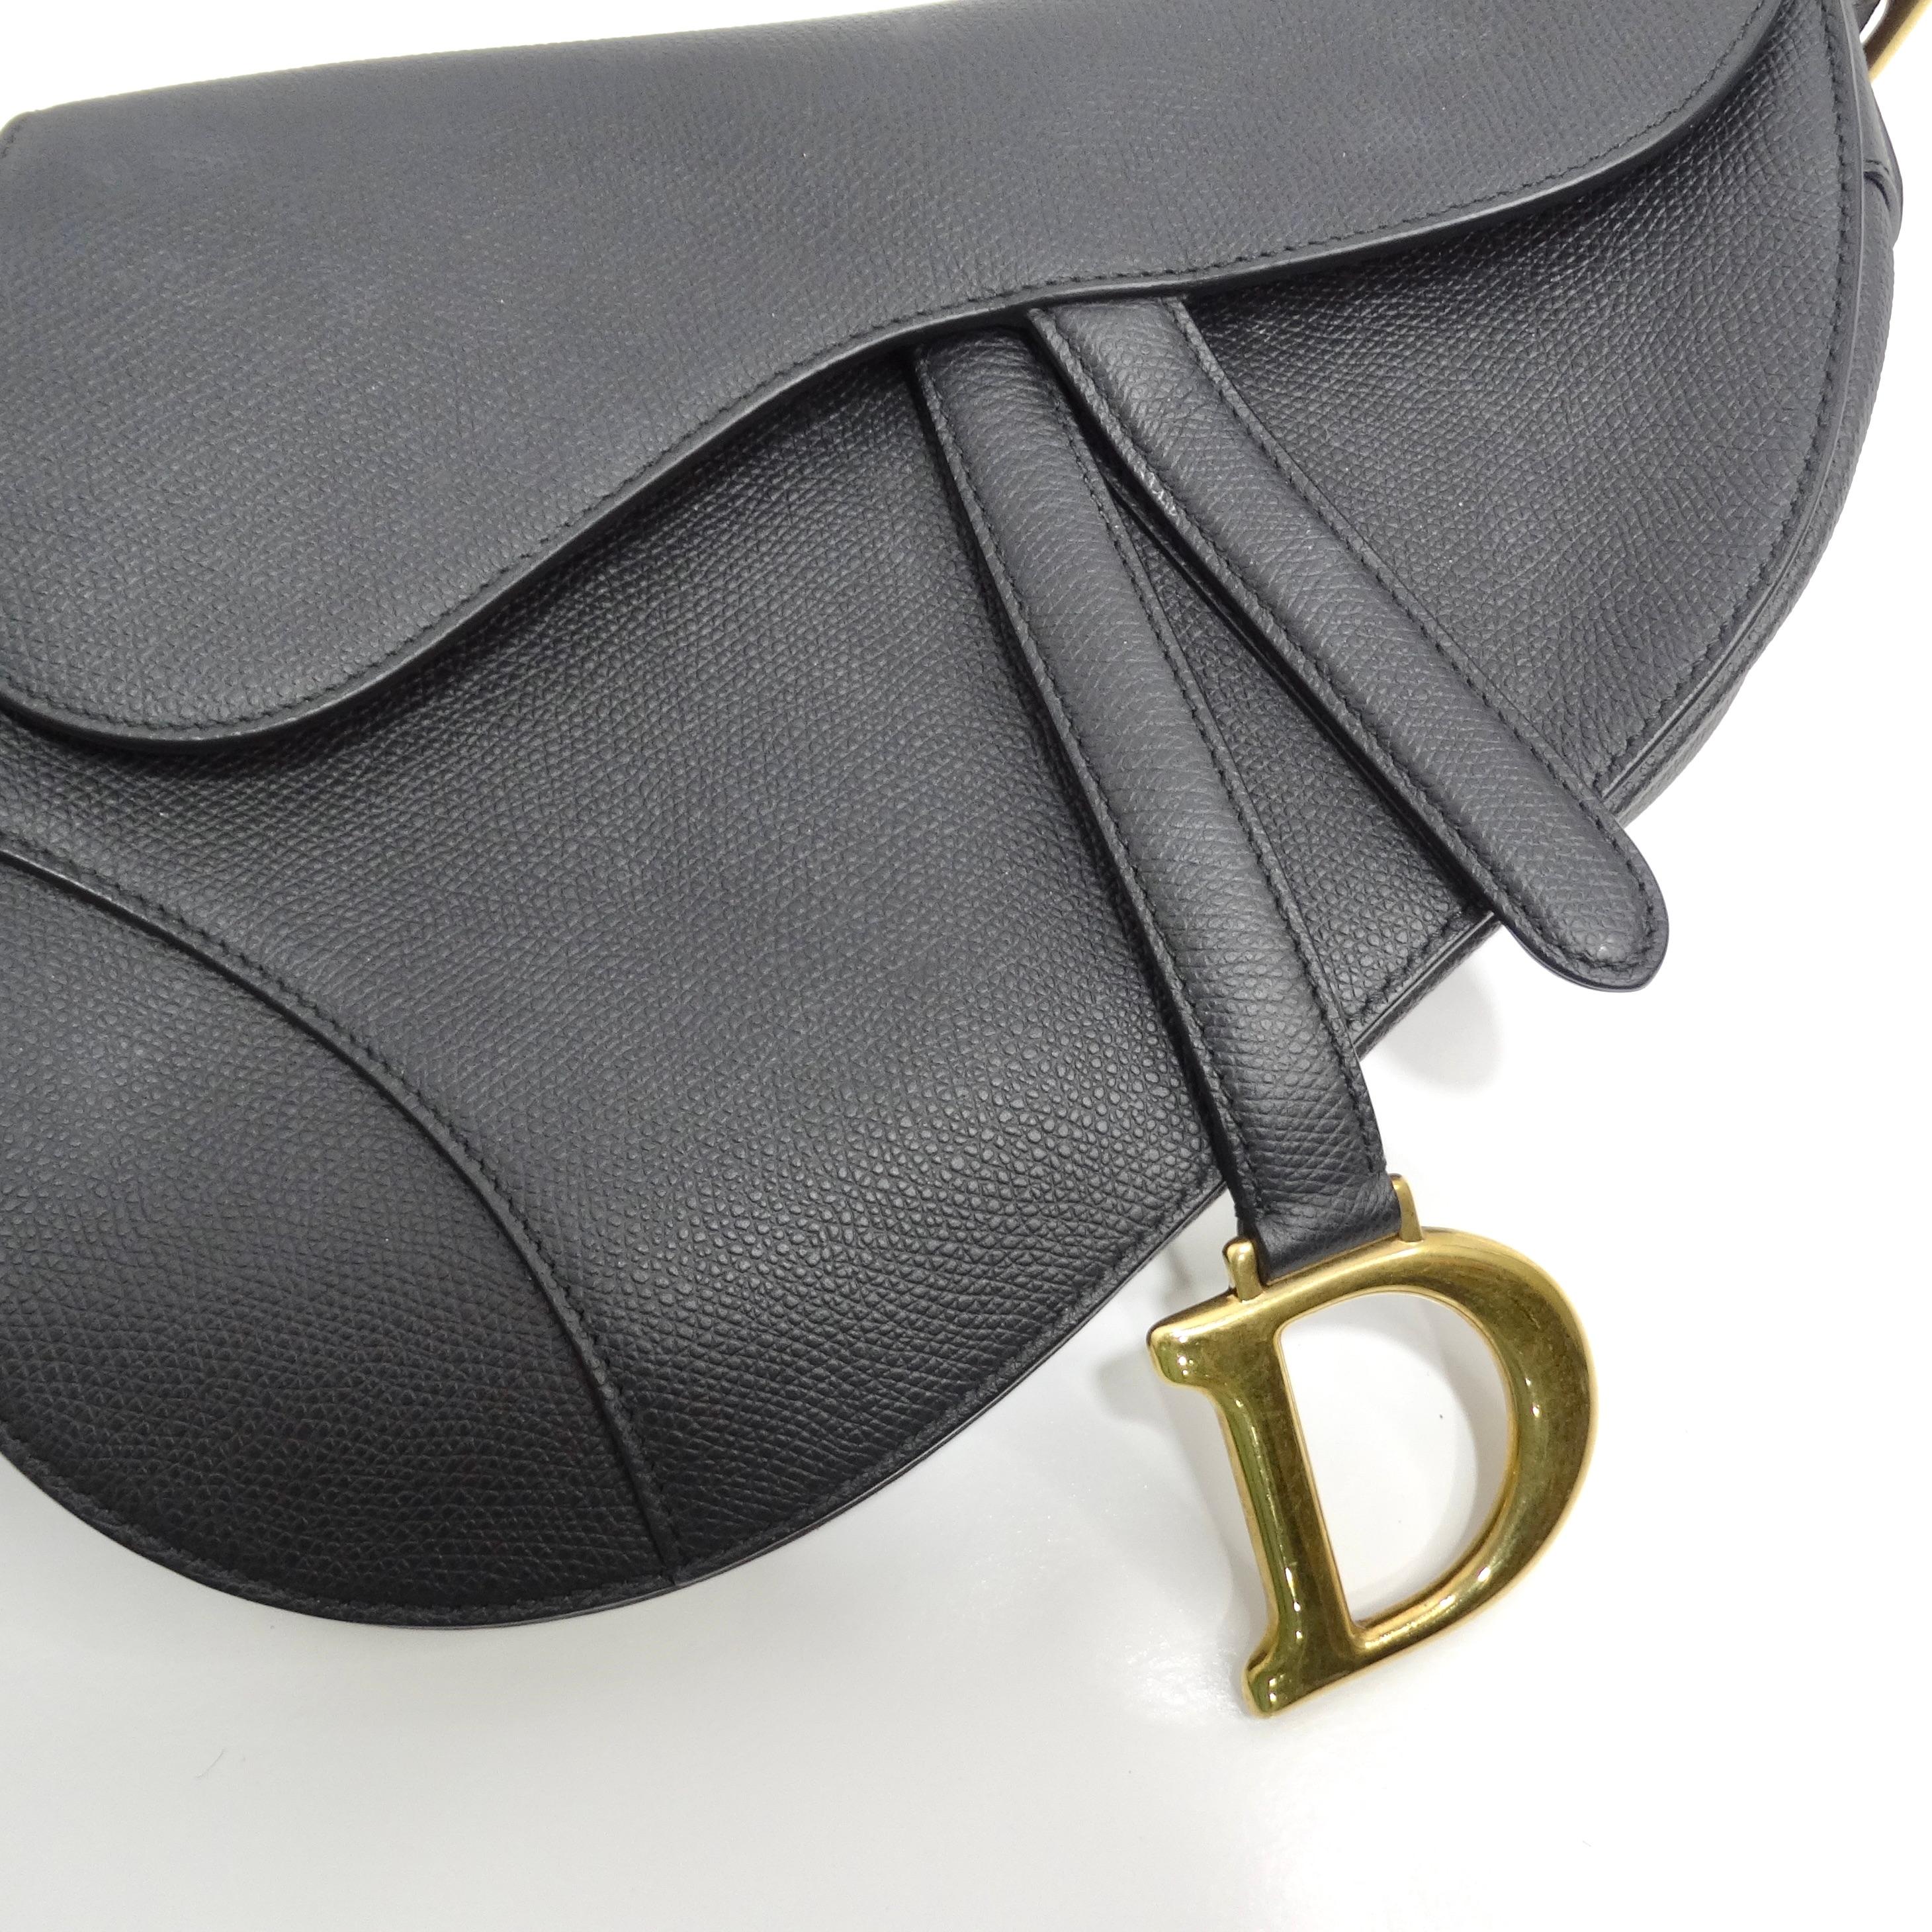 Christian Dior Medium Saddle Bag in Black Calfskin In Good Condition For Sale In Scottsdale, AZ